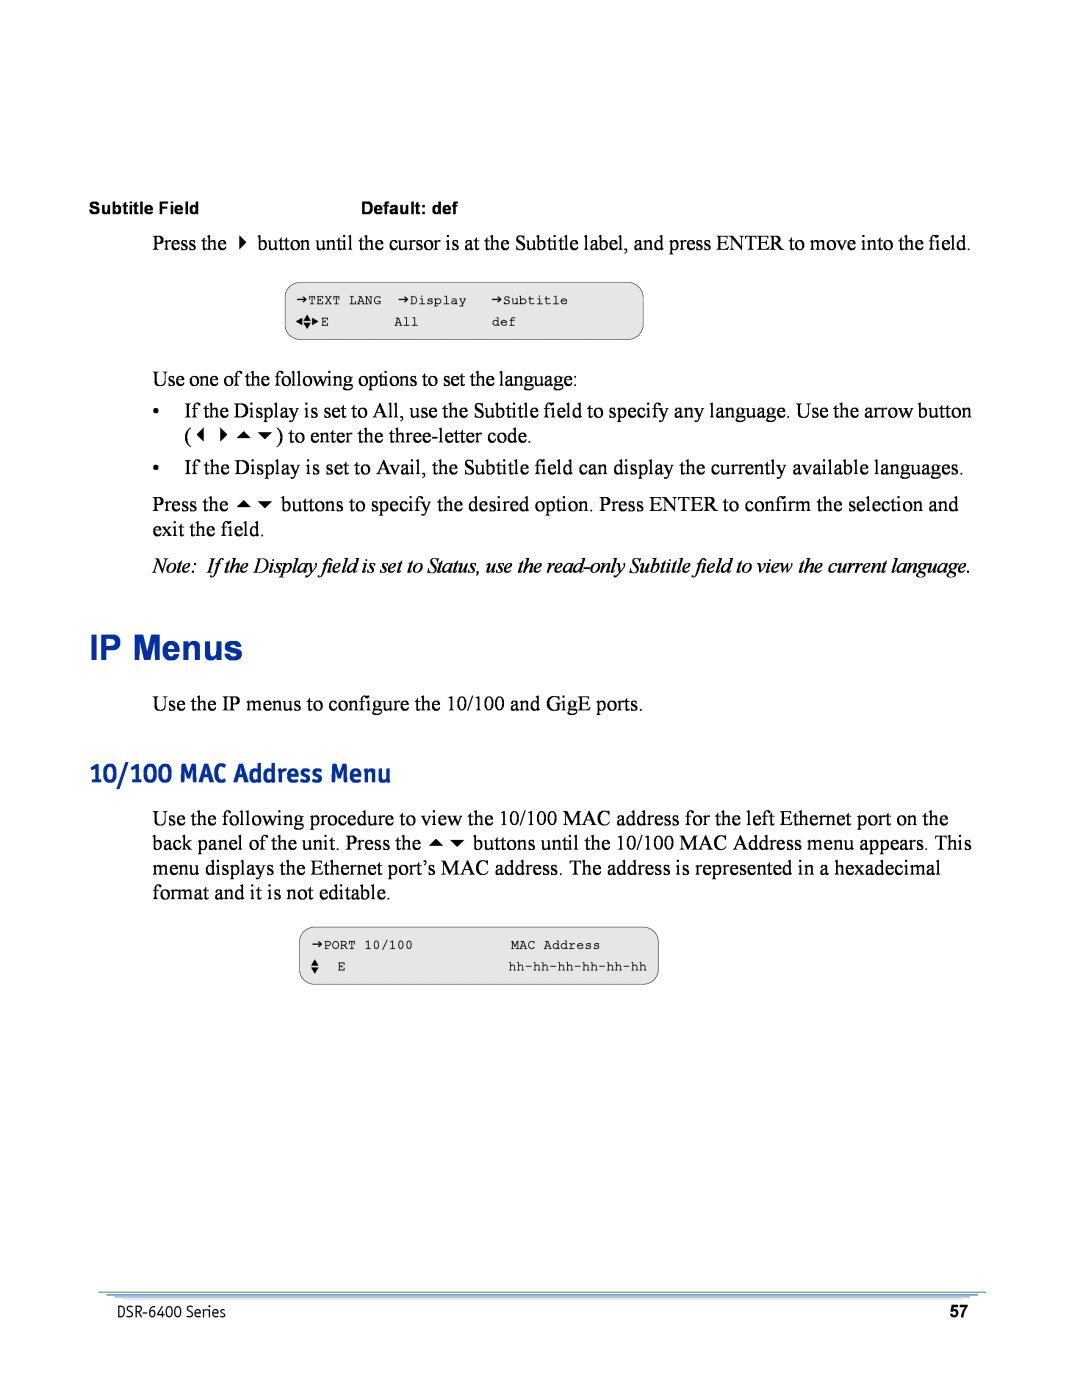 Motorola DSR-6400 manual IP Menus, 10/100 MAC Address Menu 